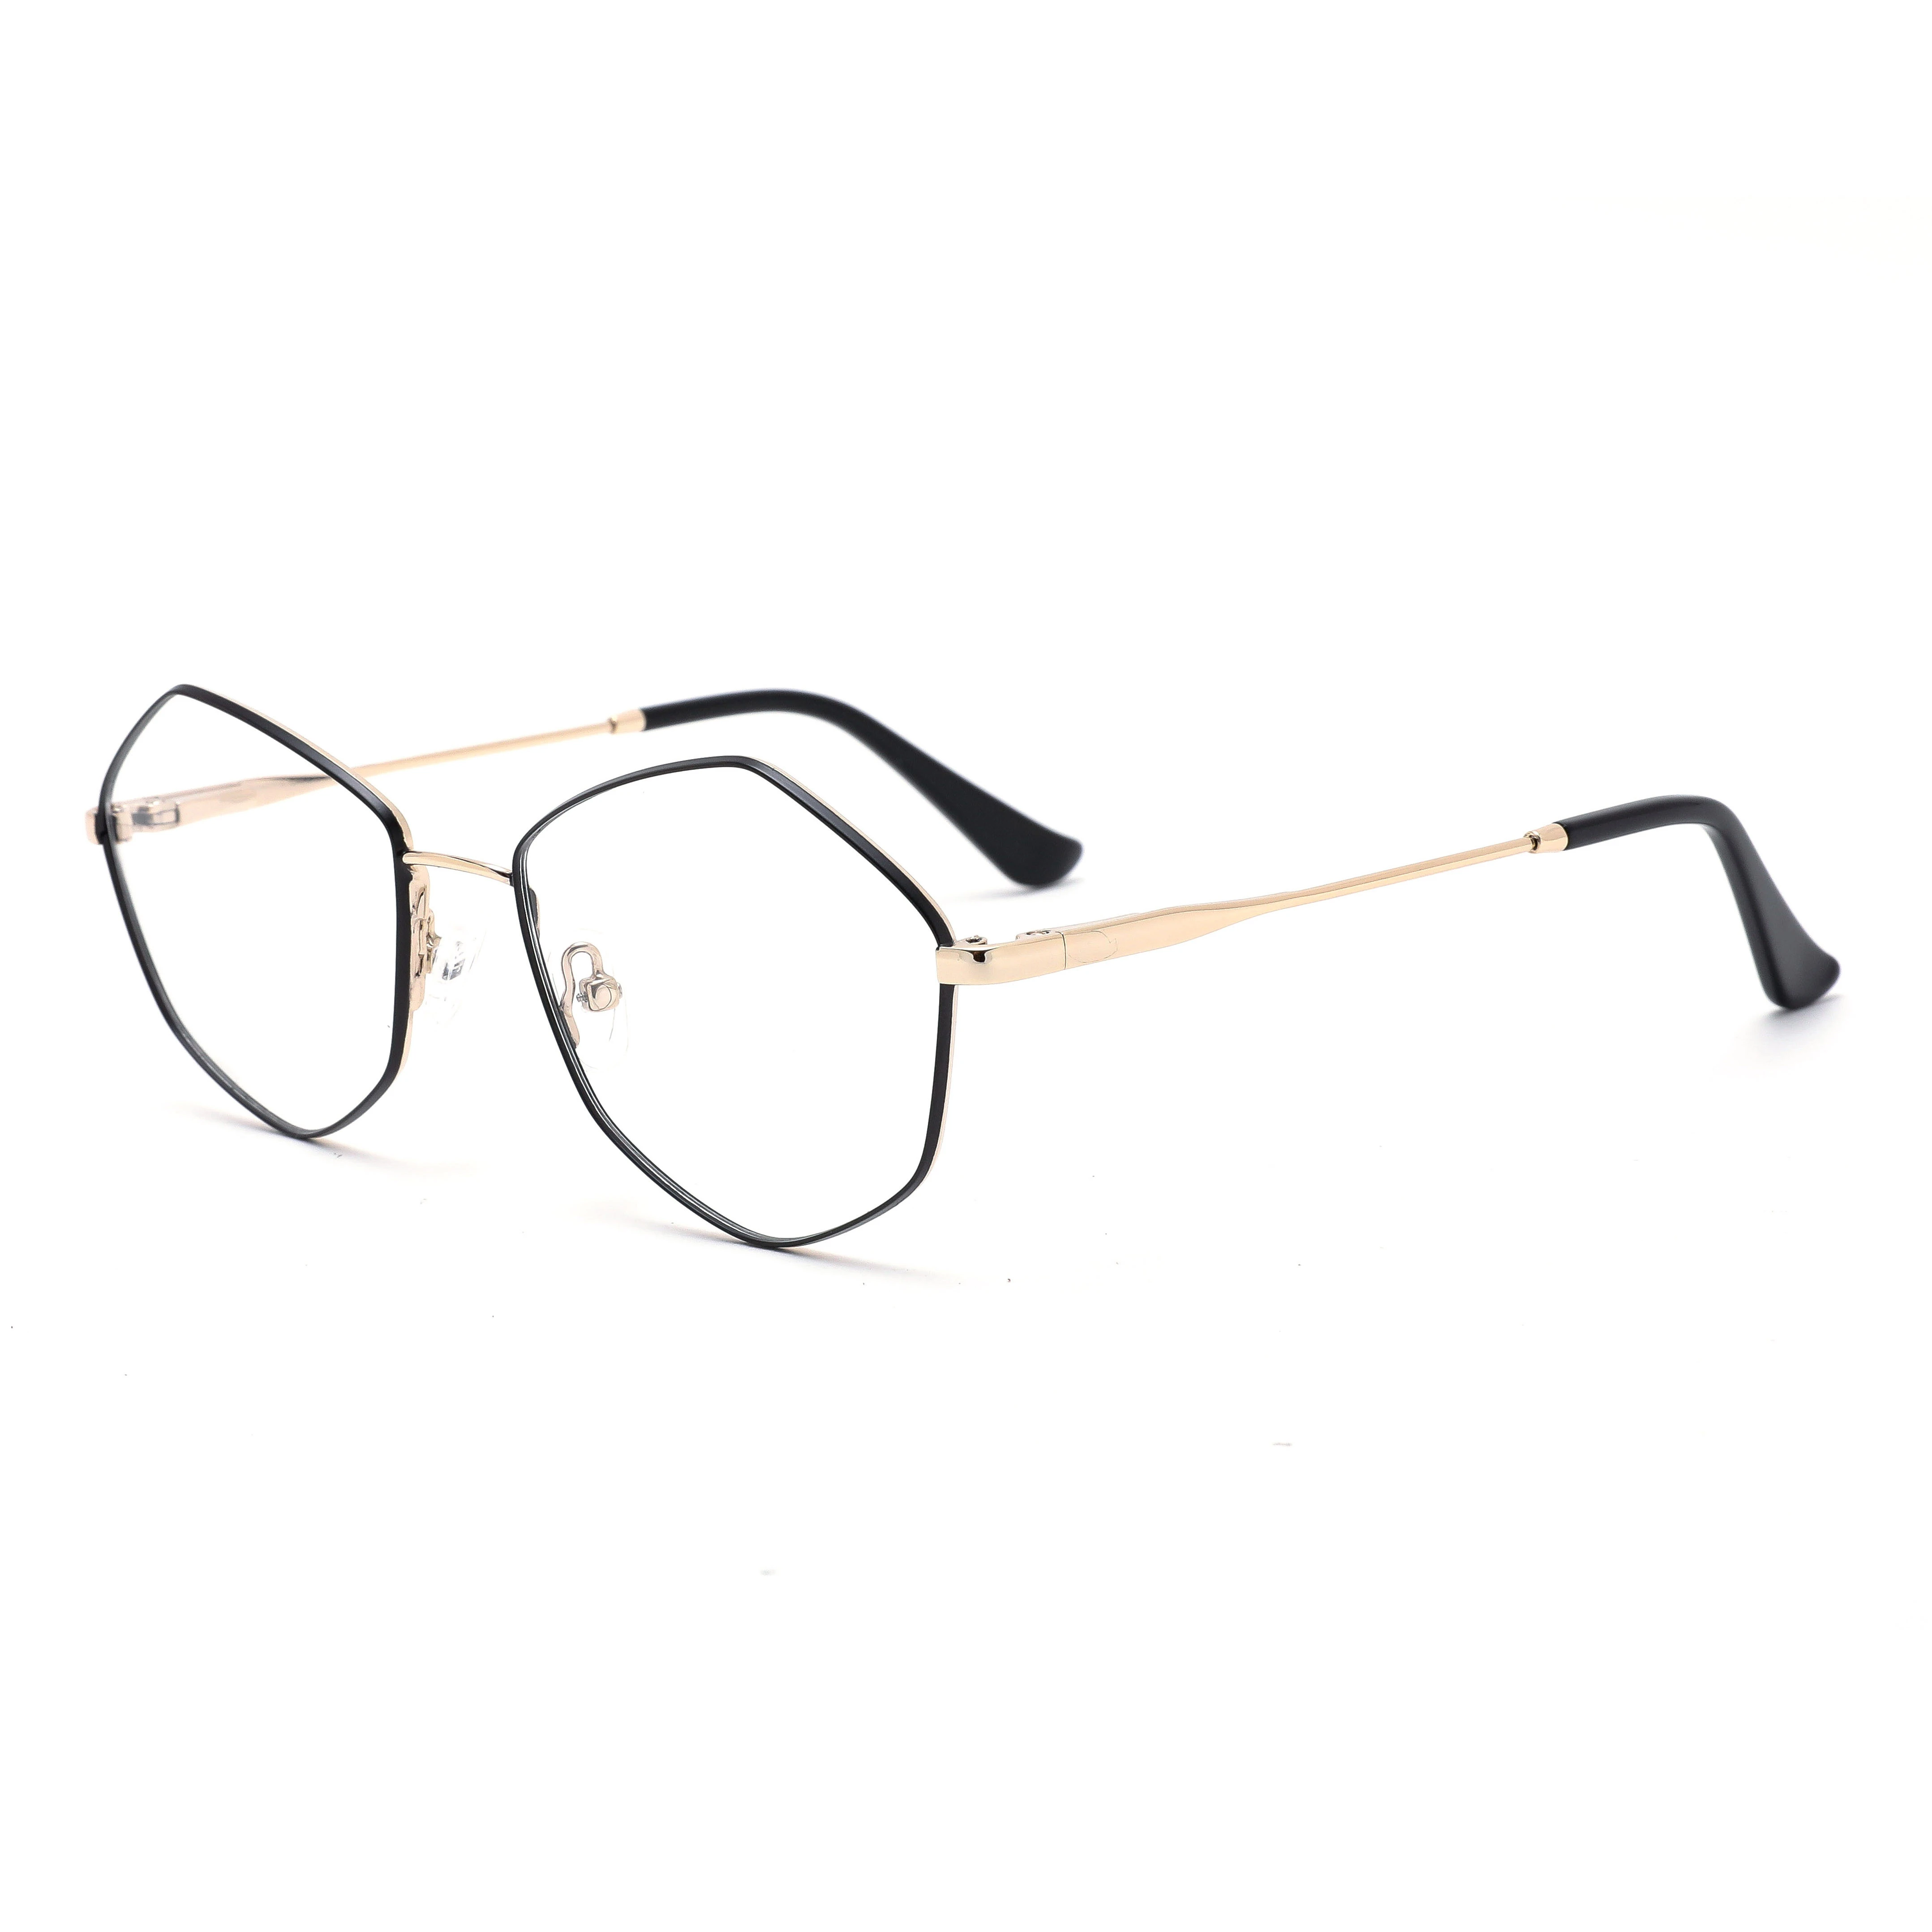 China Factory Sales Metal Frame Cat Eye Glasses Women Optical Glasses